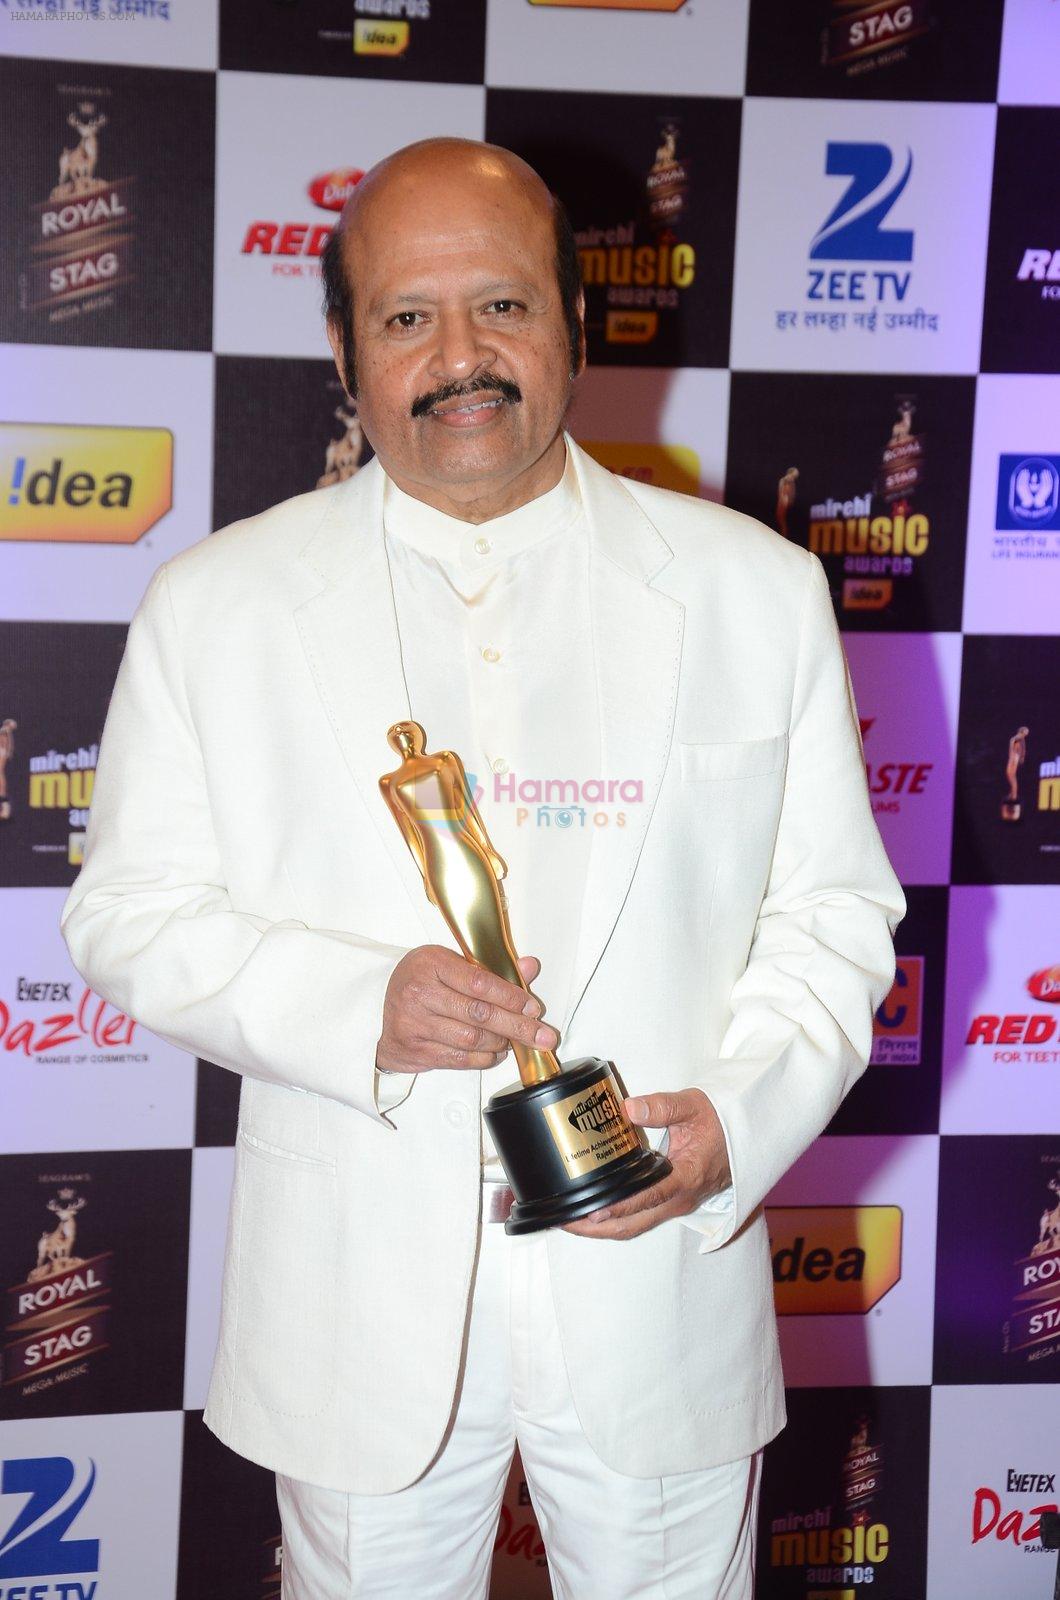 at radio mirchi awards red carpet in Mumbai on 29th Feb 2016